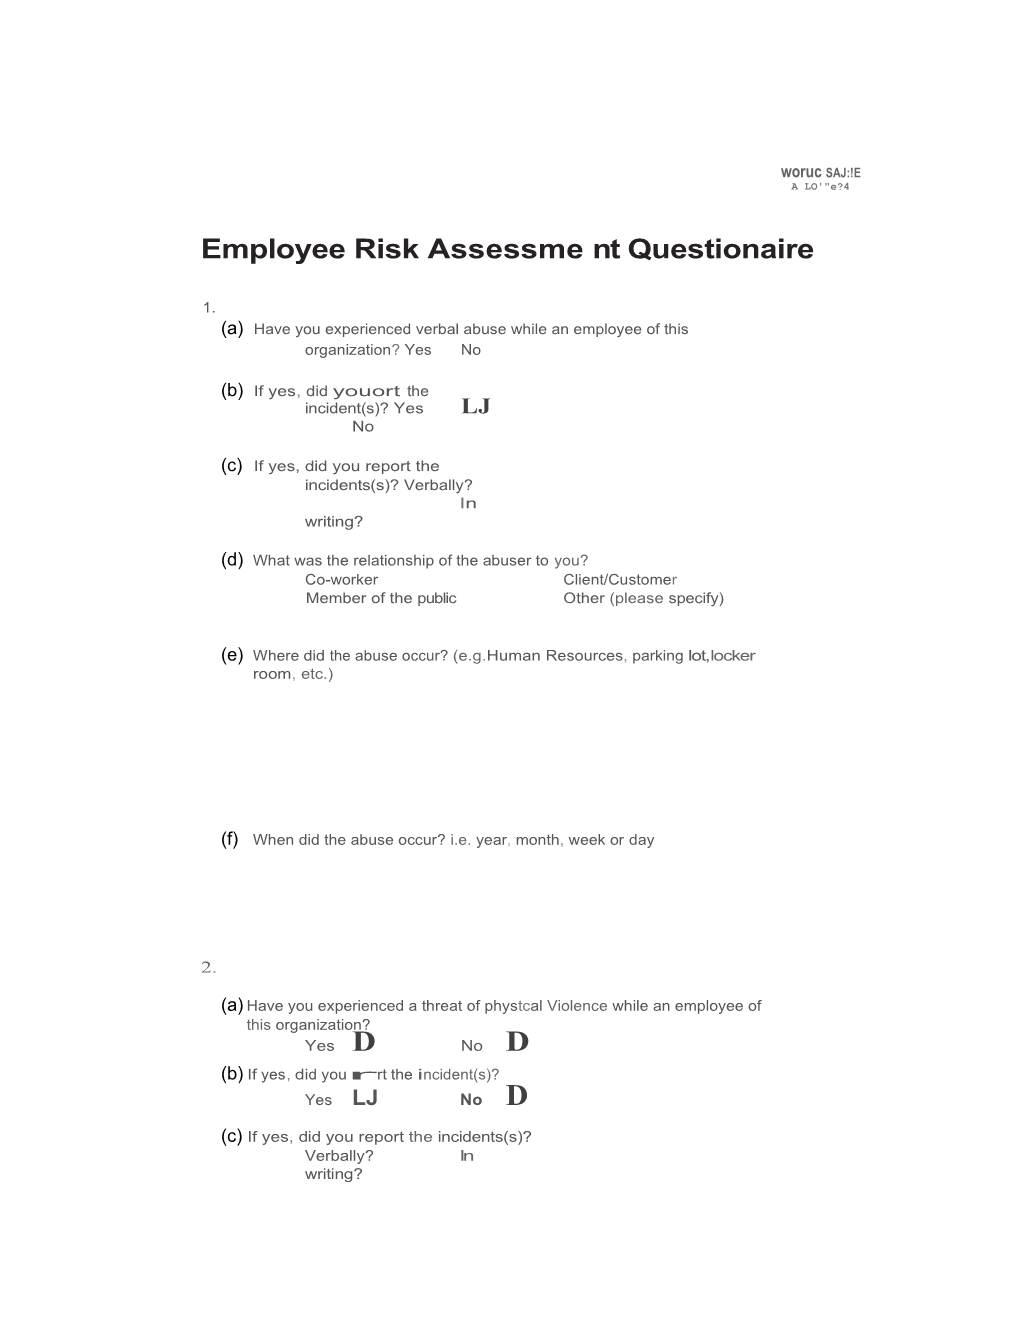 Employee Risk Assessment Questionaire